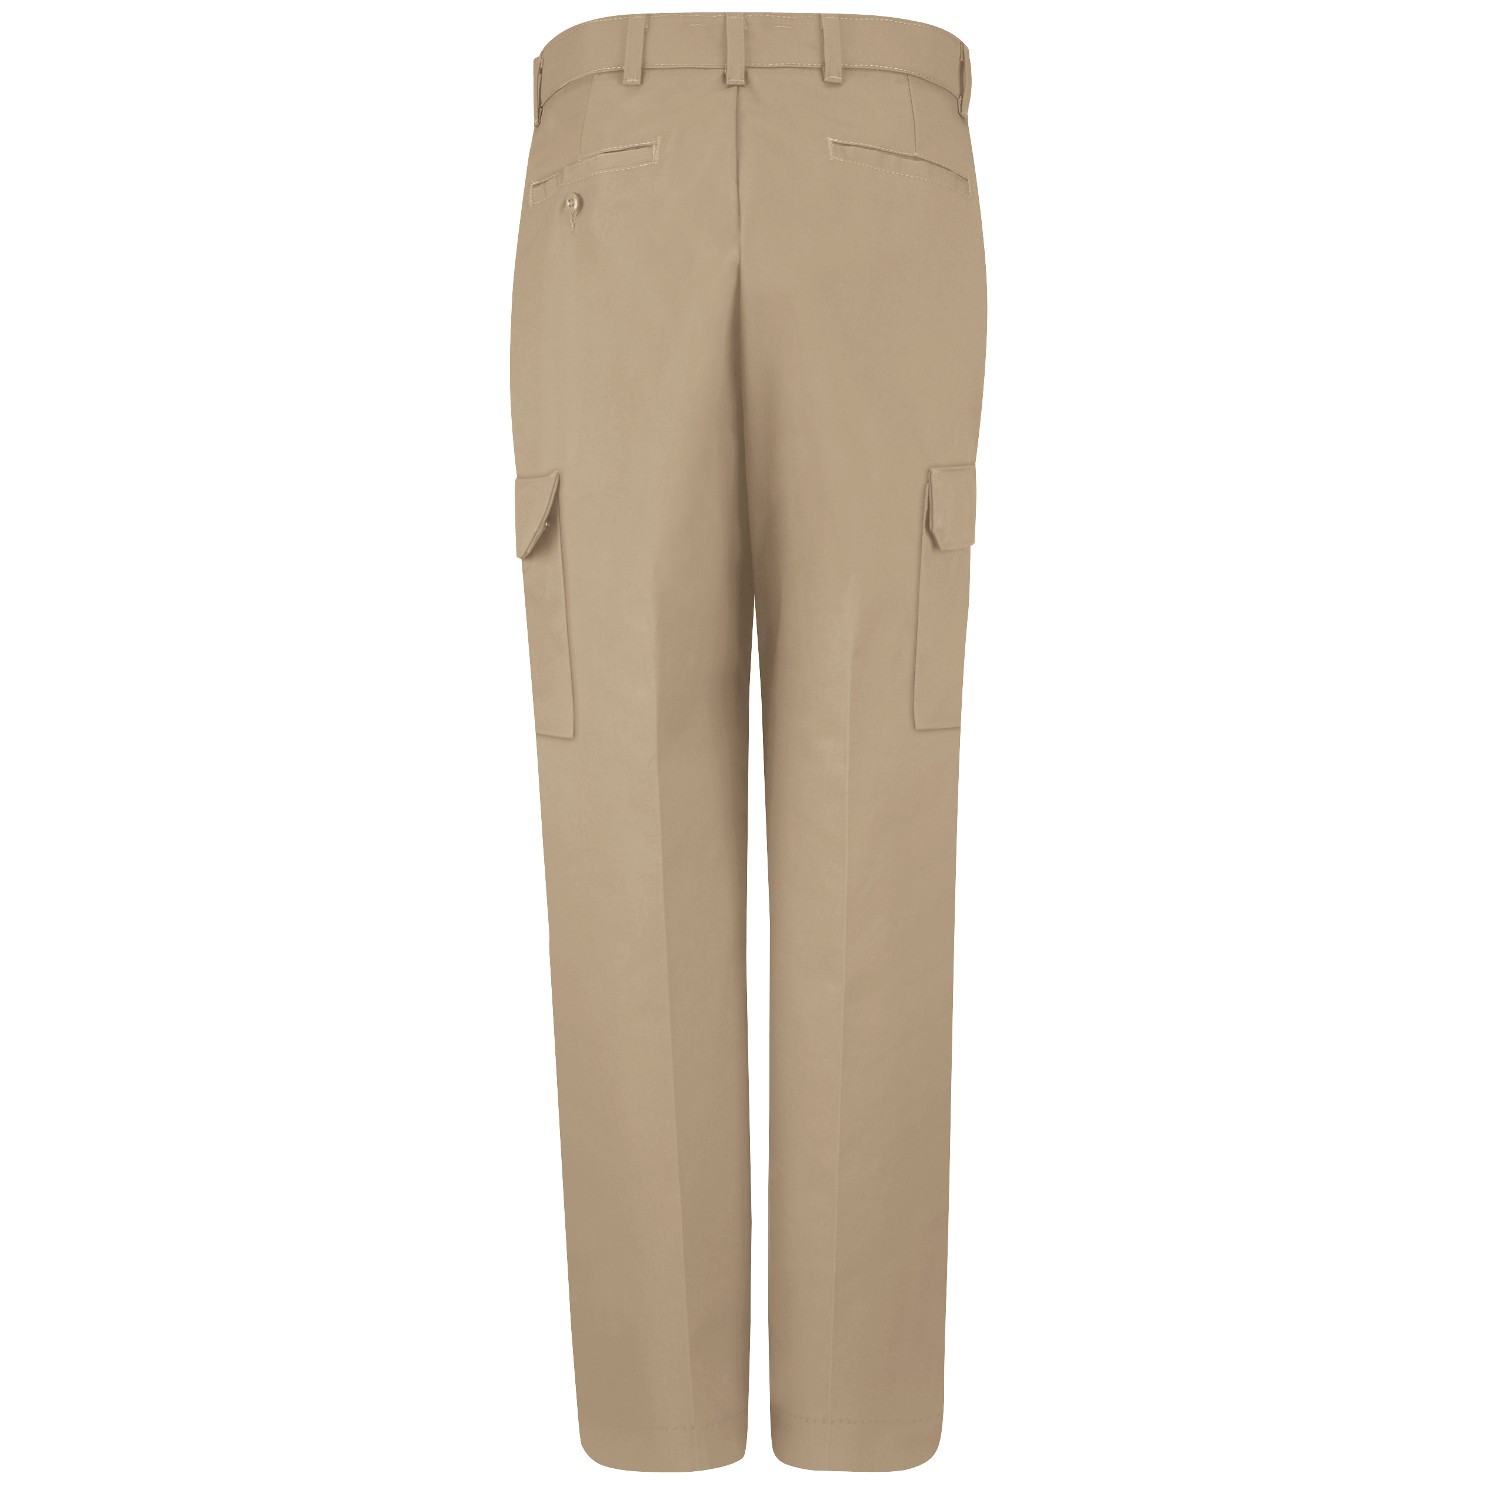 Red Kap PT88 Men's Industrial Cargo Pants - Khaki | FullSource.com